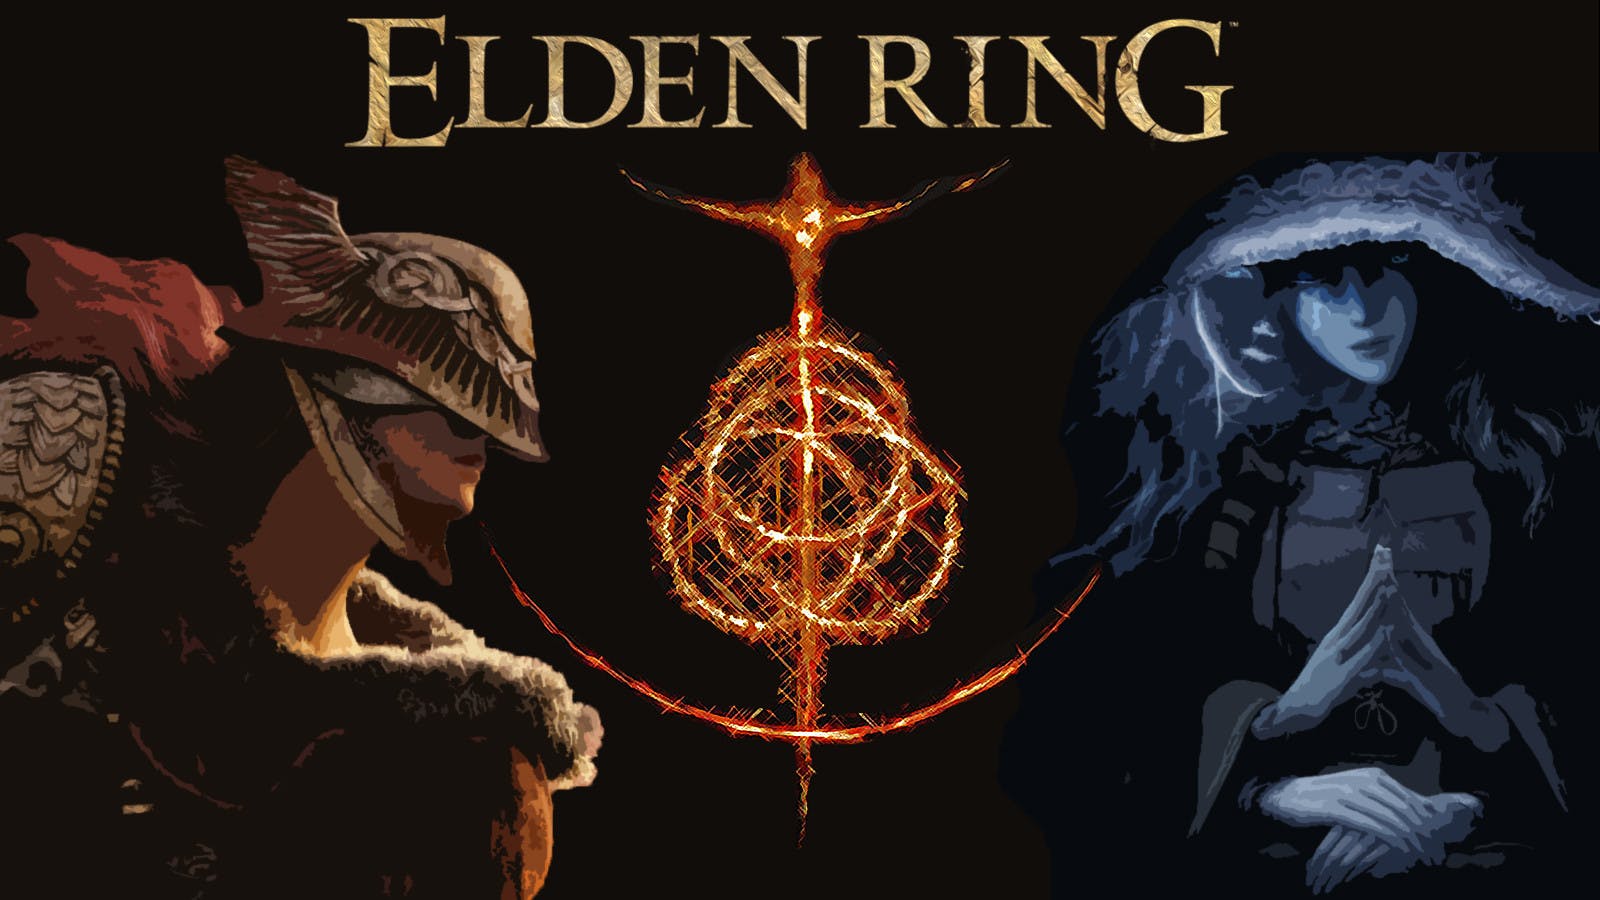 REVIEW: “Elden Ring” is game design modern masterpiece